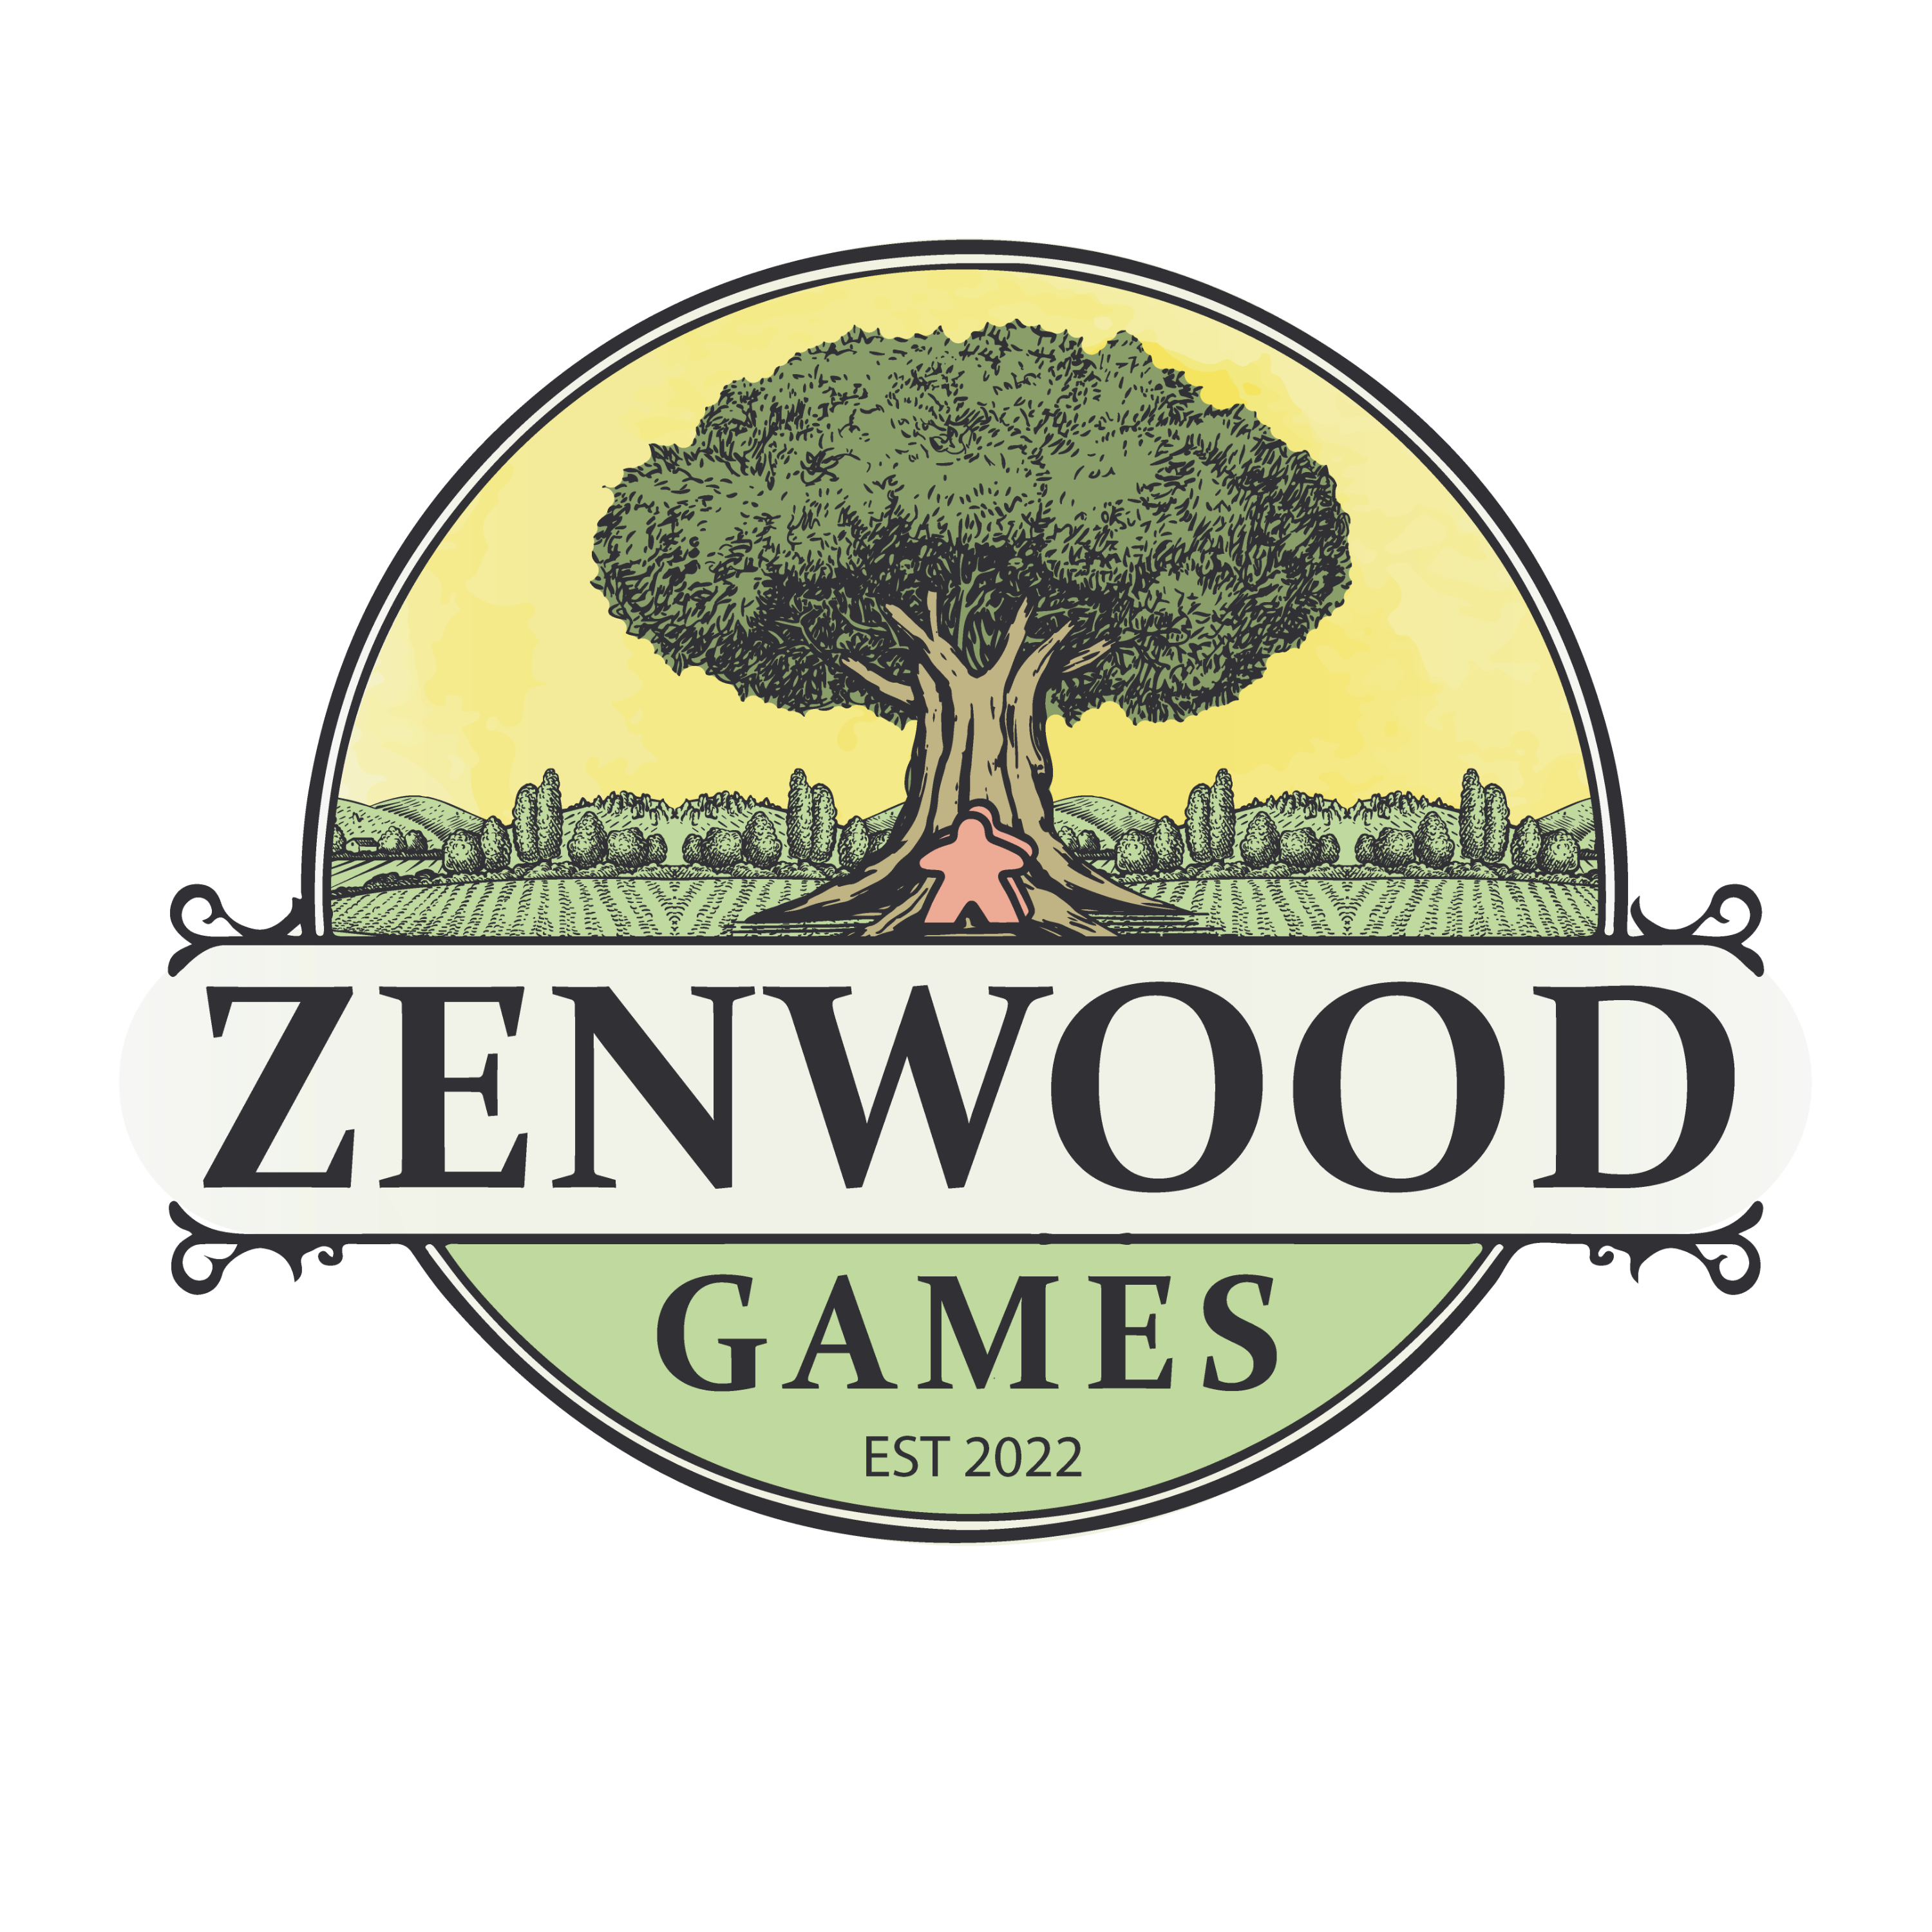 Royal Thief - A Free 2-Player Mini-Game! – Zenwood Games